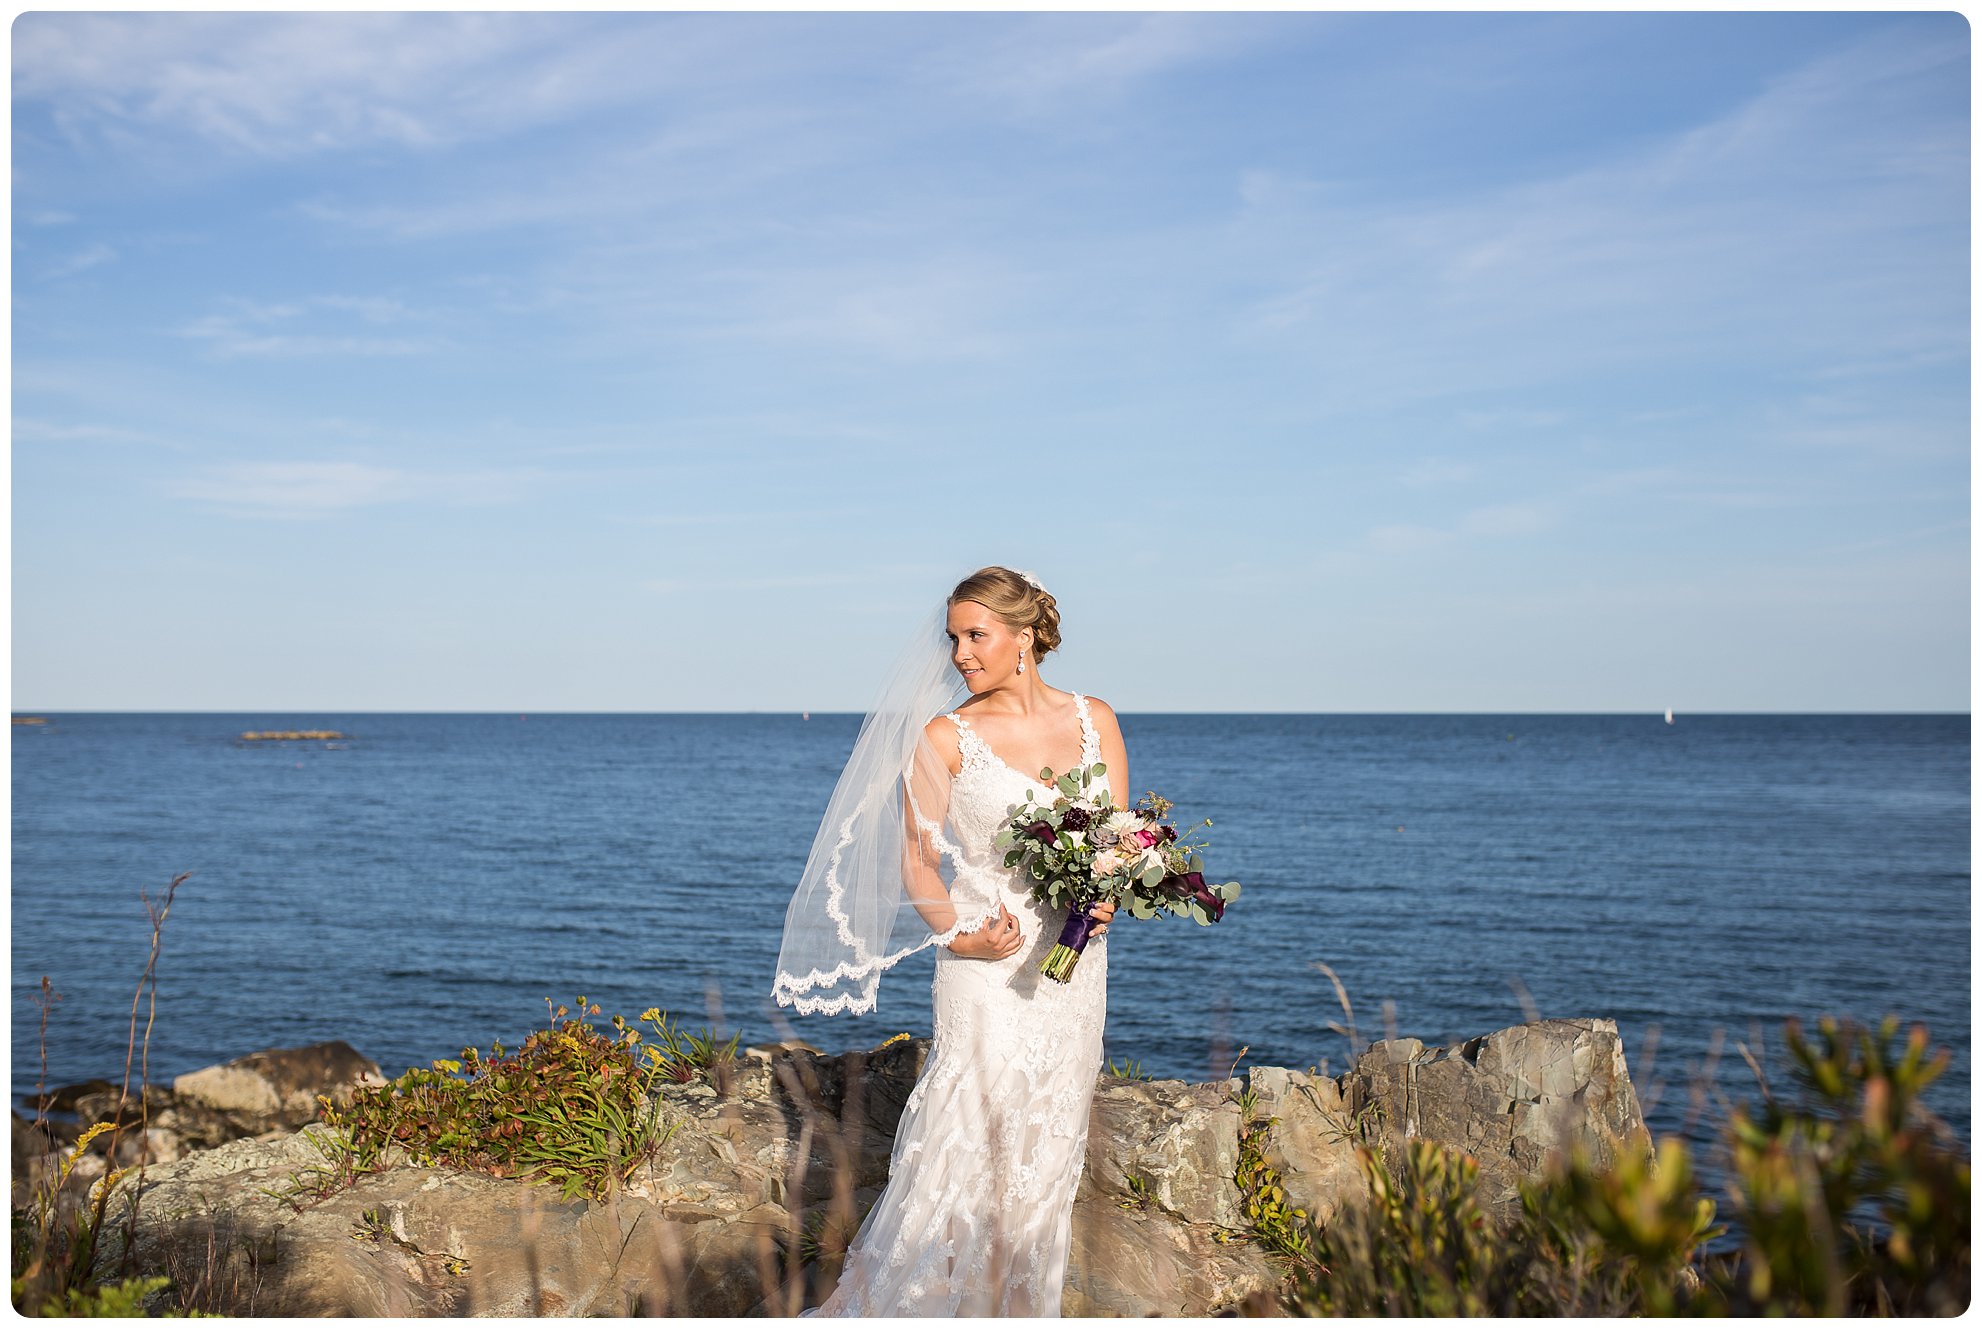 Melanie Grady Photography - Maine wedding photographer - Stage Neck Inn, Ogunquit Maine, York Maine wedding -62_BLOG.jpg